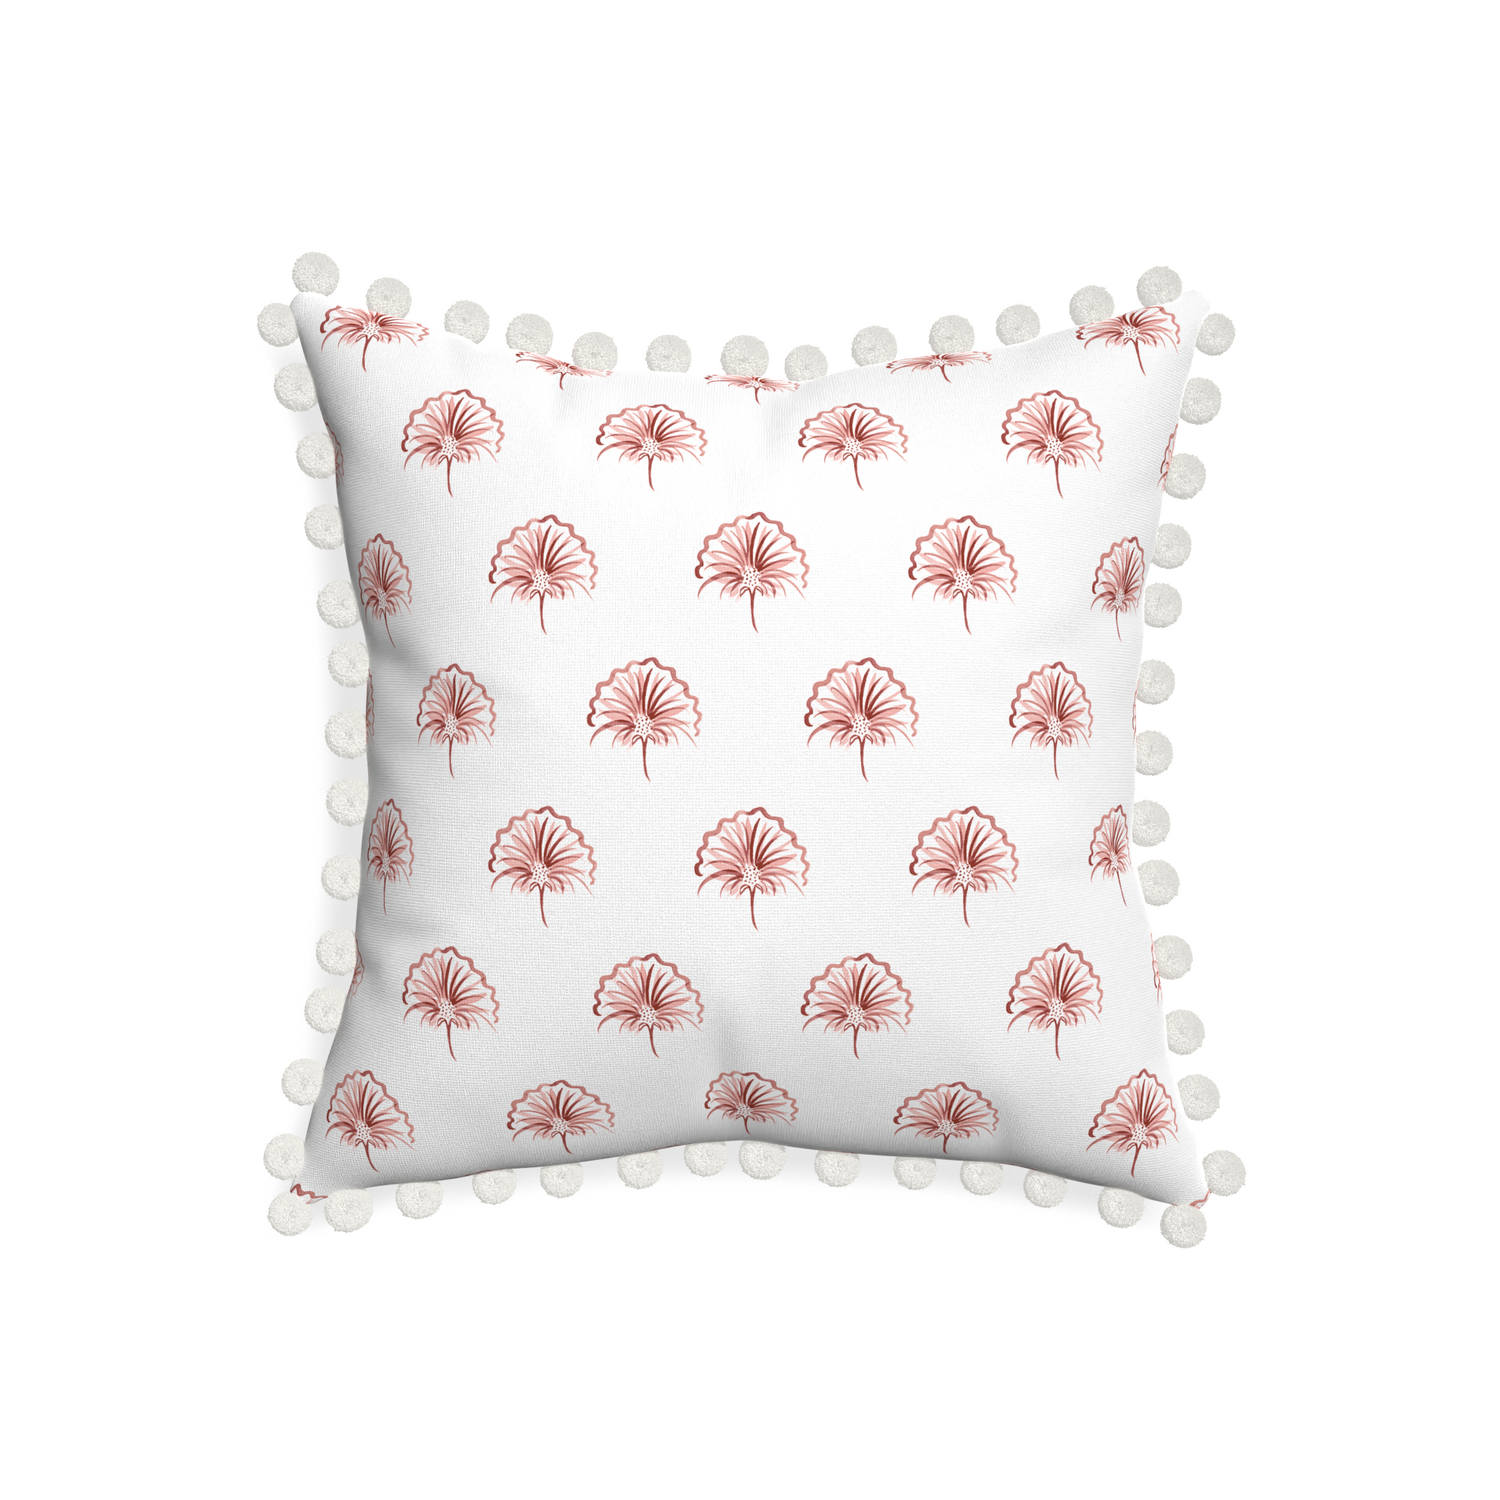 20-square penelope rose custom pillow with snow pom pom on white background